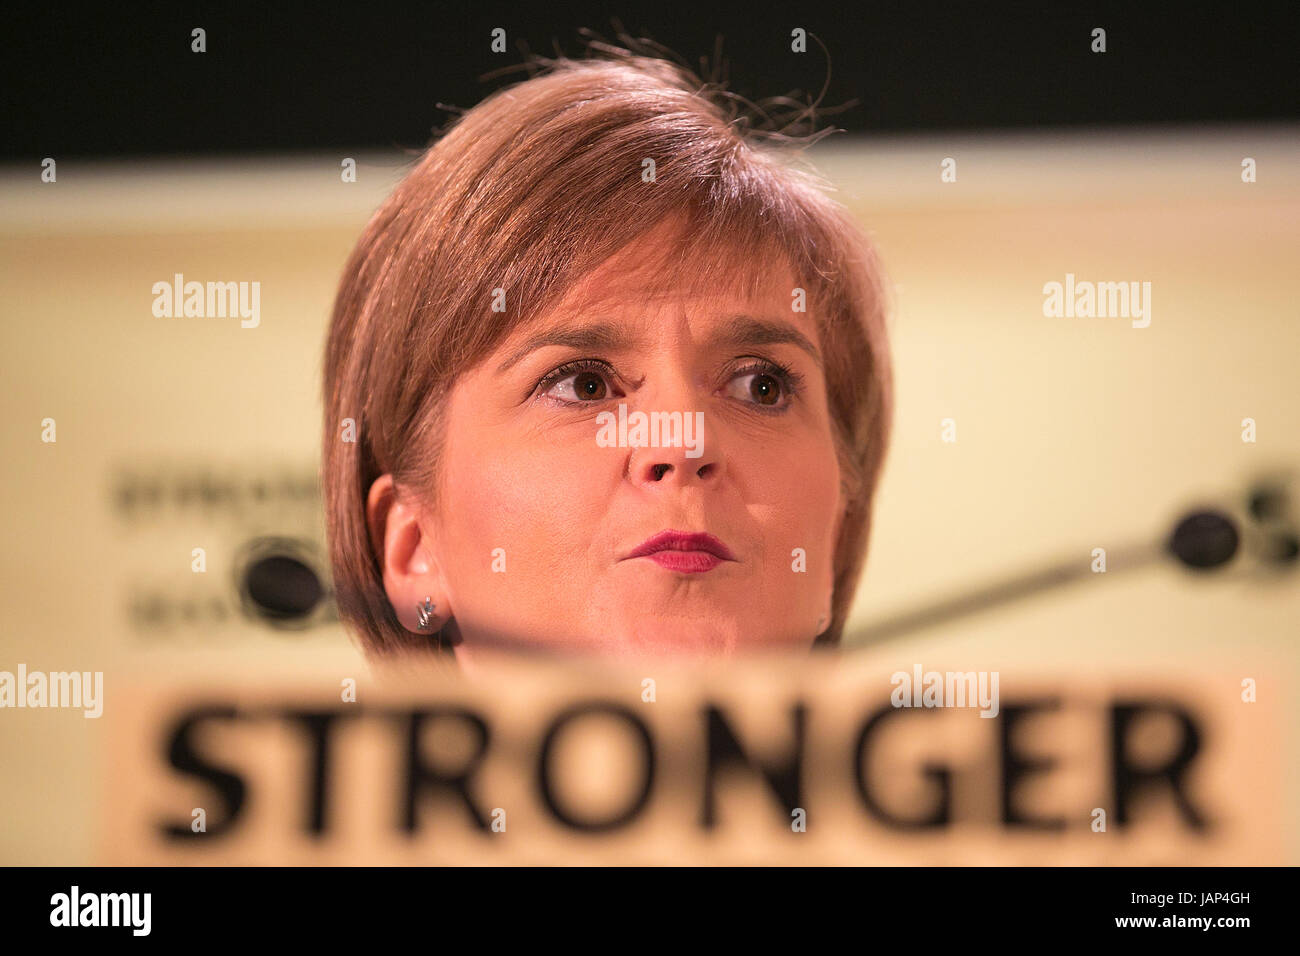 First Minister Nicola Sturgeon of the SNP Stock Photo